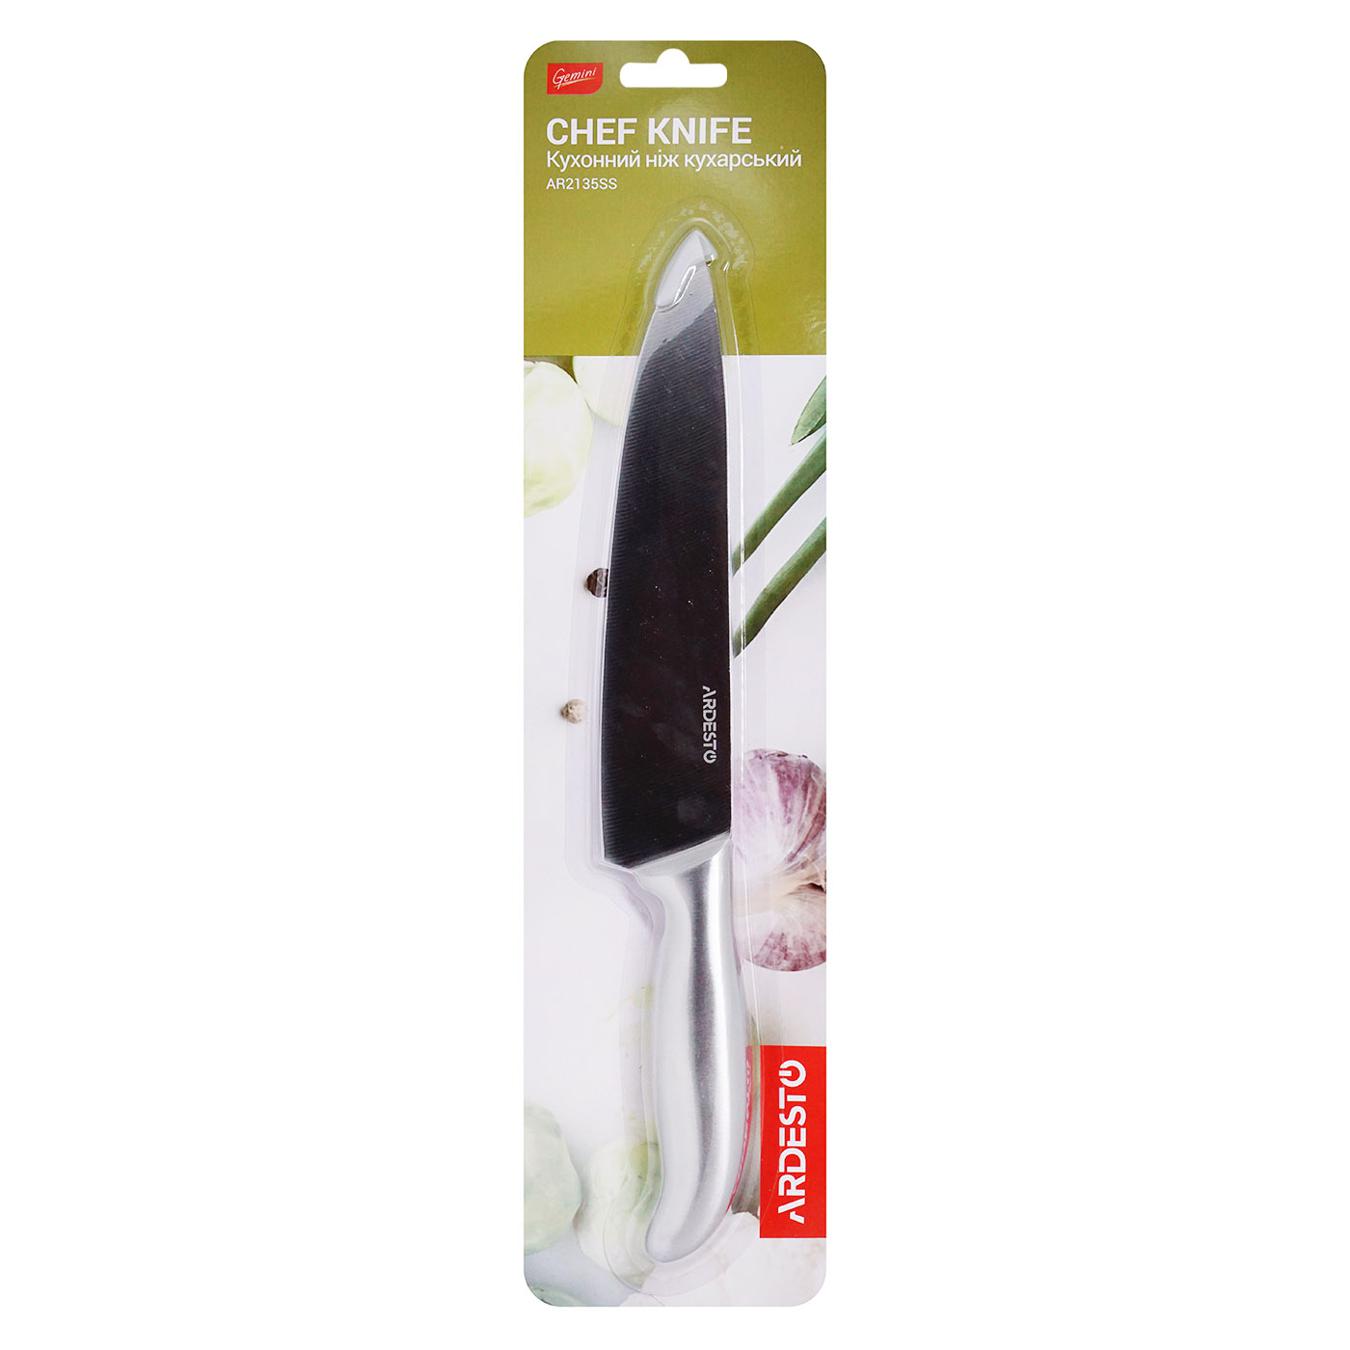 Ardesto Gemini stainless steel kitchen knife 20.3 cm